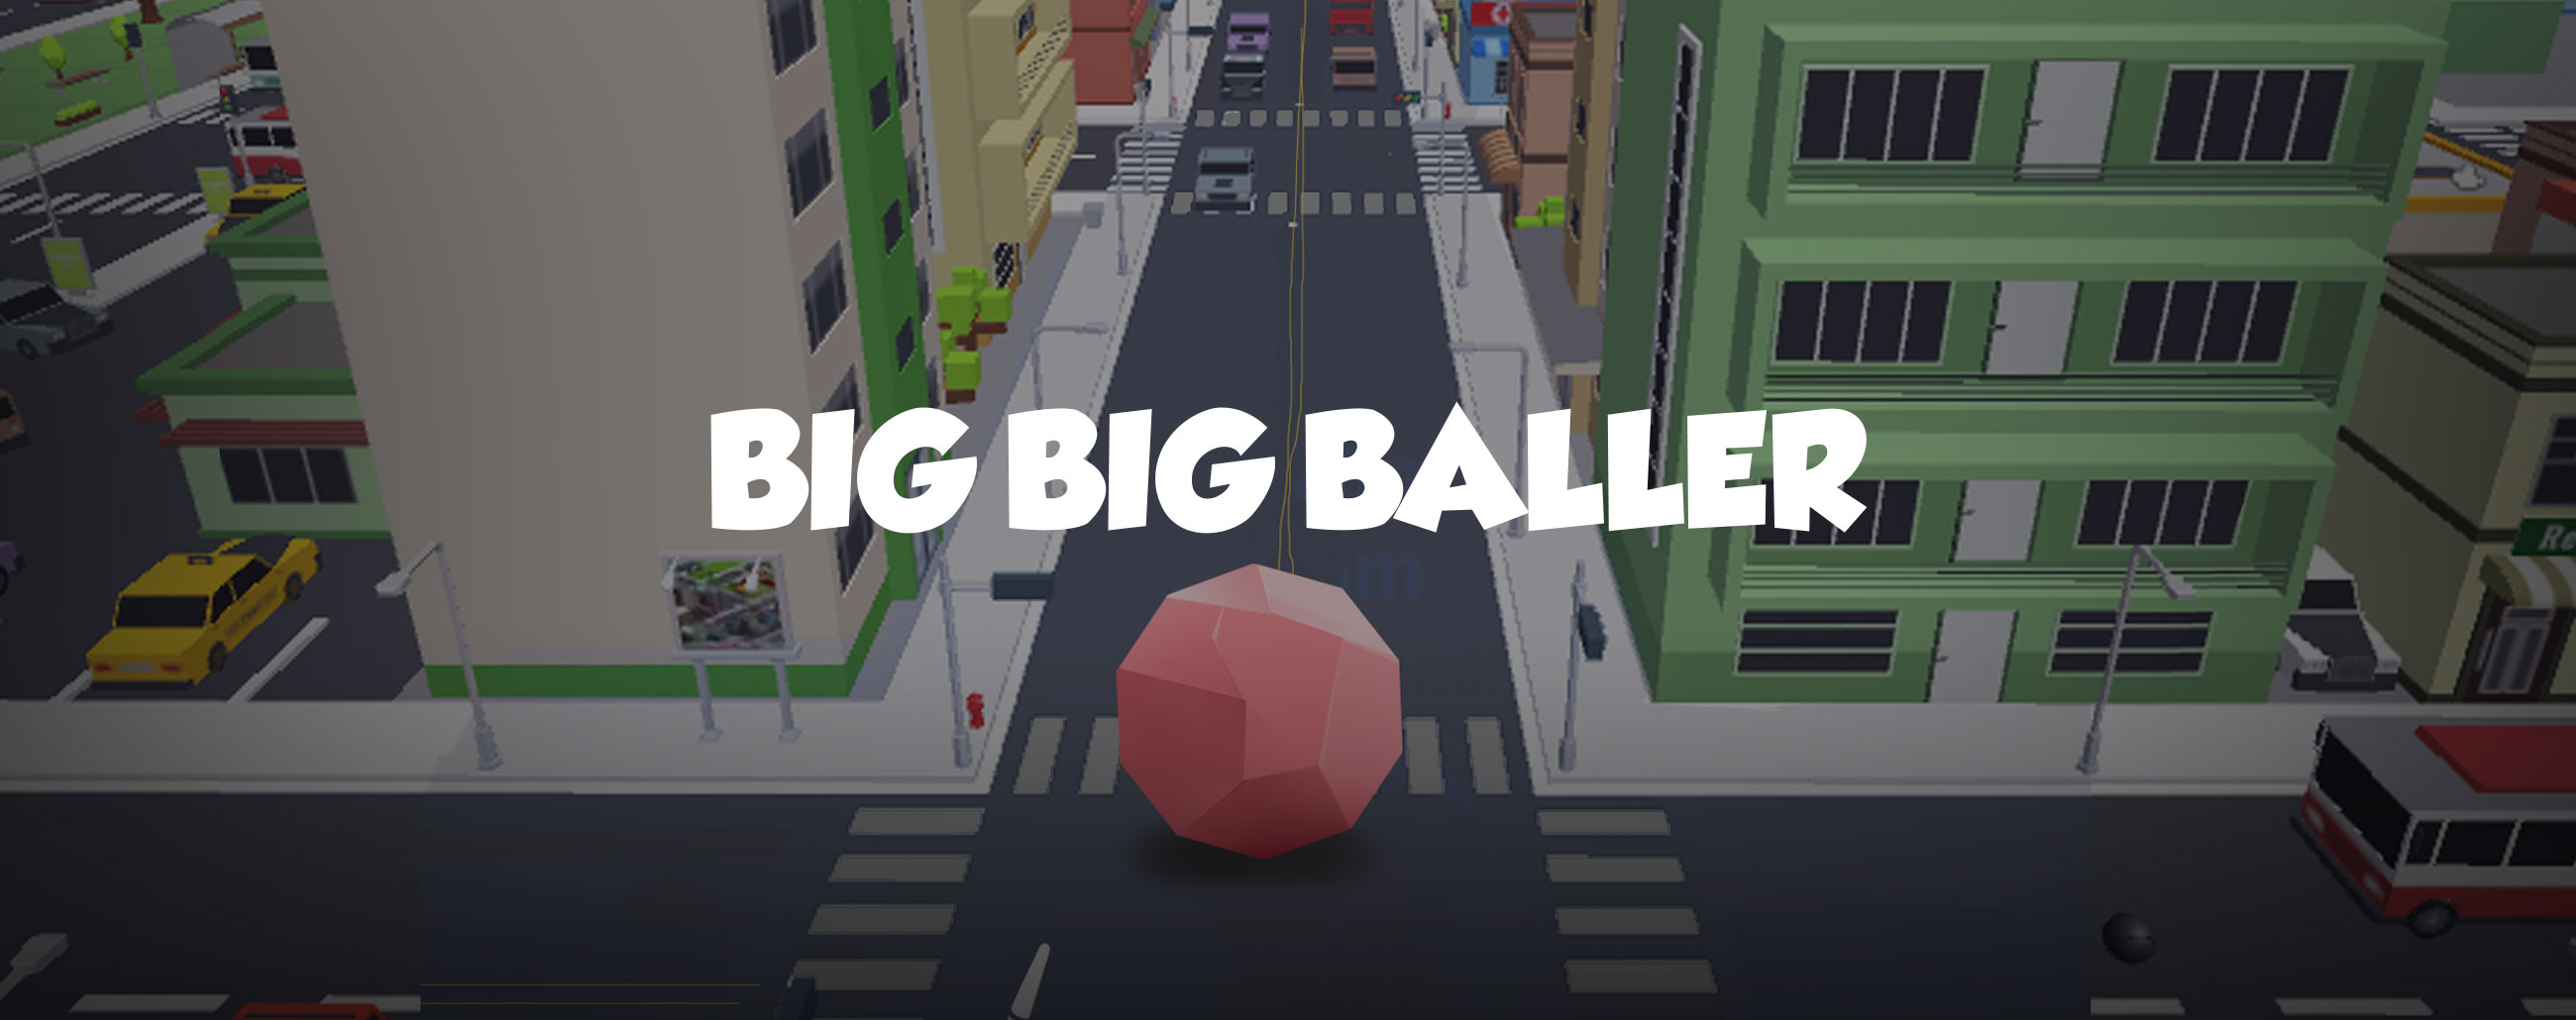 Big Big Baller